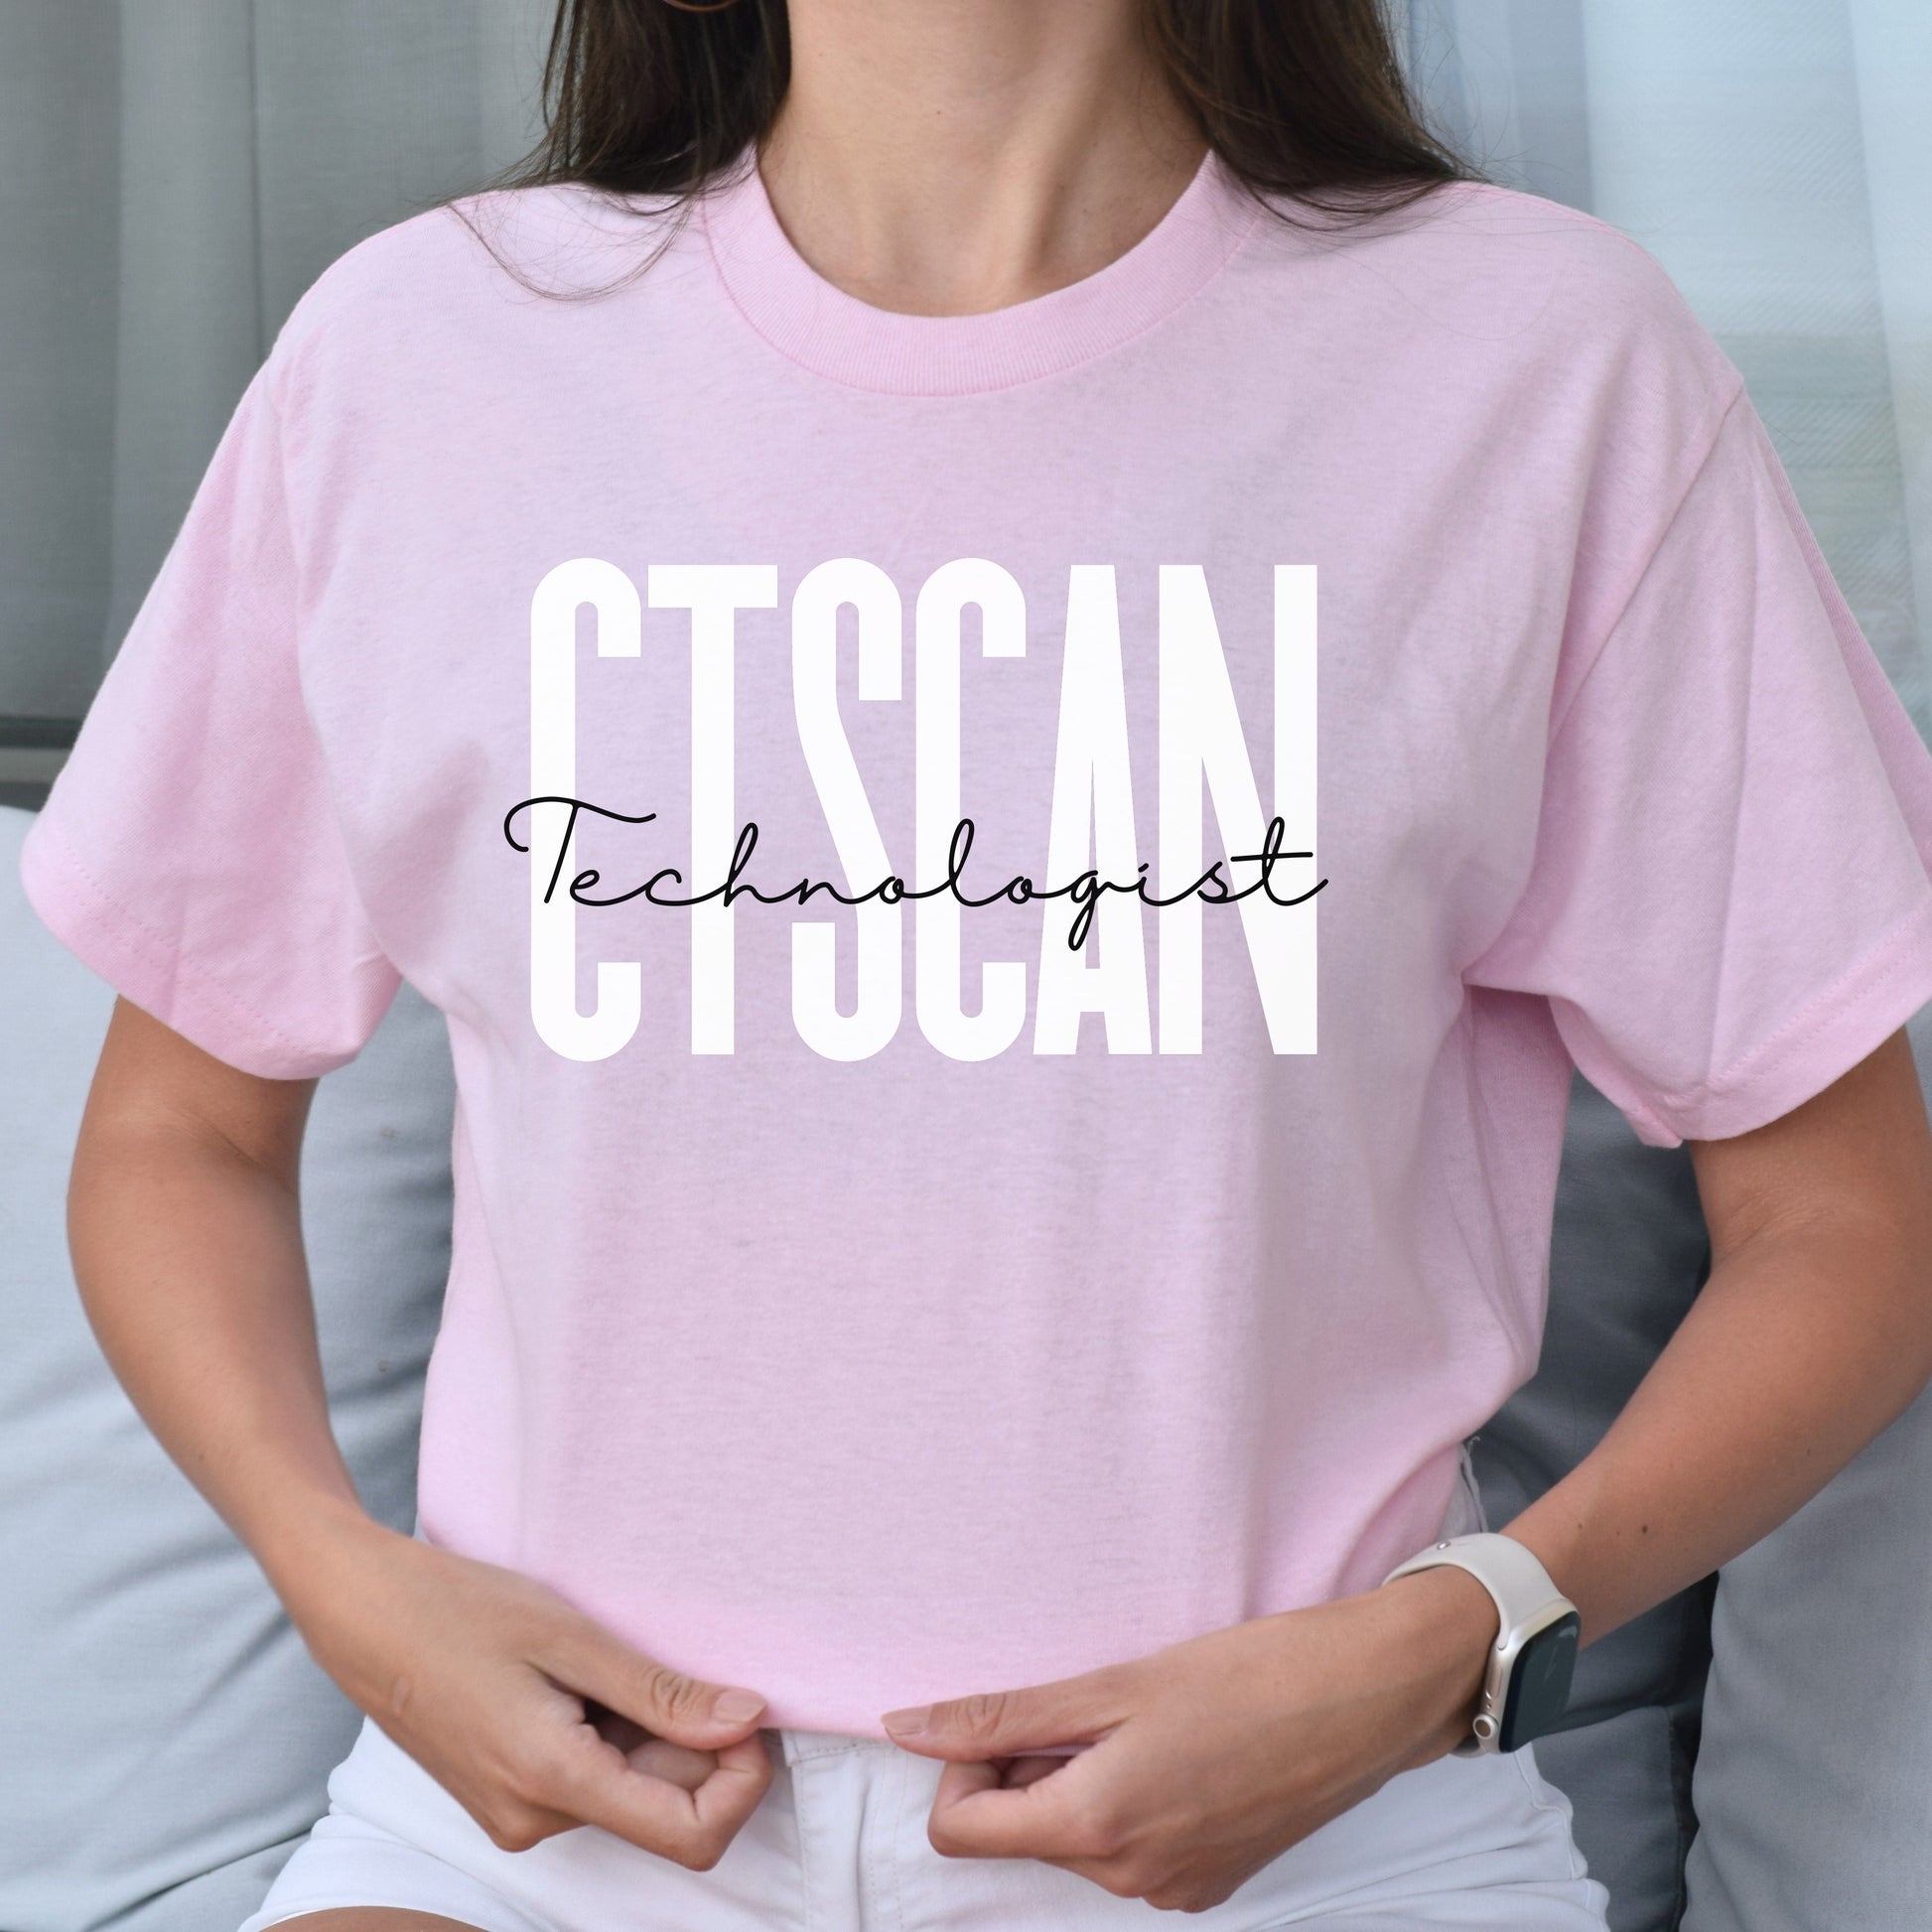 Ctscan Technologist Unisex T-shirt CT scan tech Sand Blue Pink-Light Pink-Family-Gift-Planet